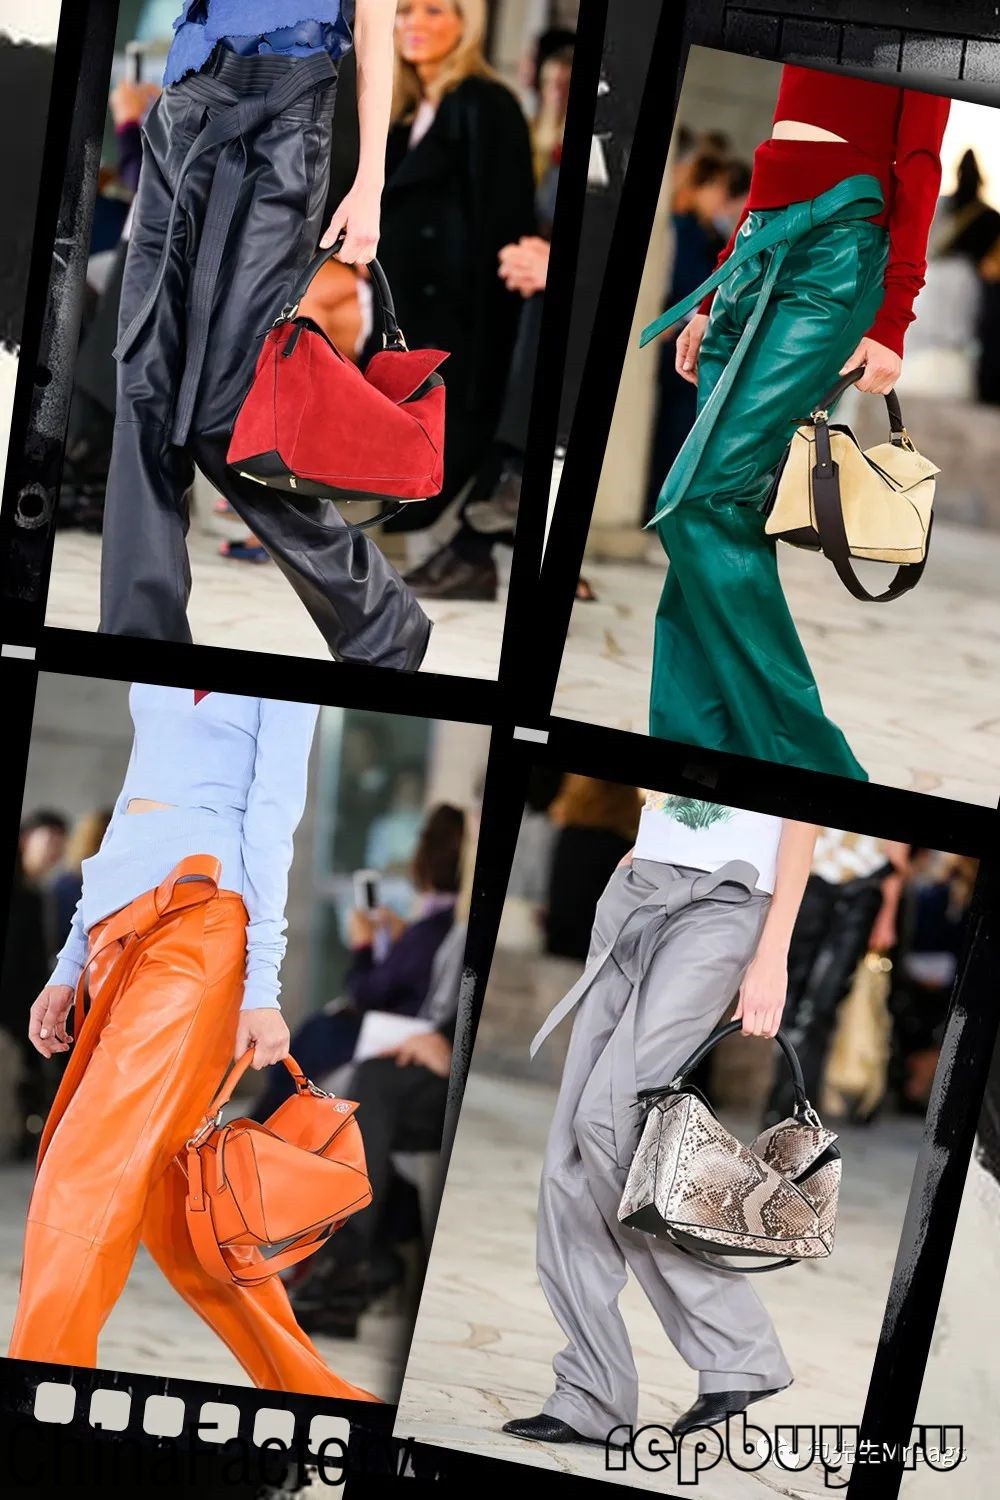 Top 5 most popular high quality replica bags (updated in 2022)-Best Quality Fake Louis Vuitton Bag Online Store, Replica designer bag ru